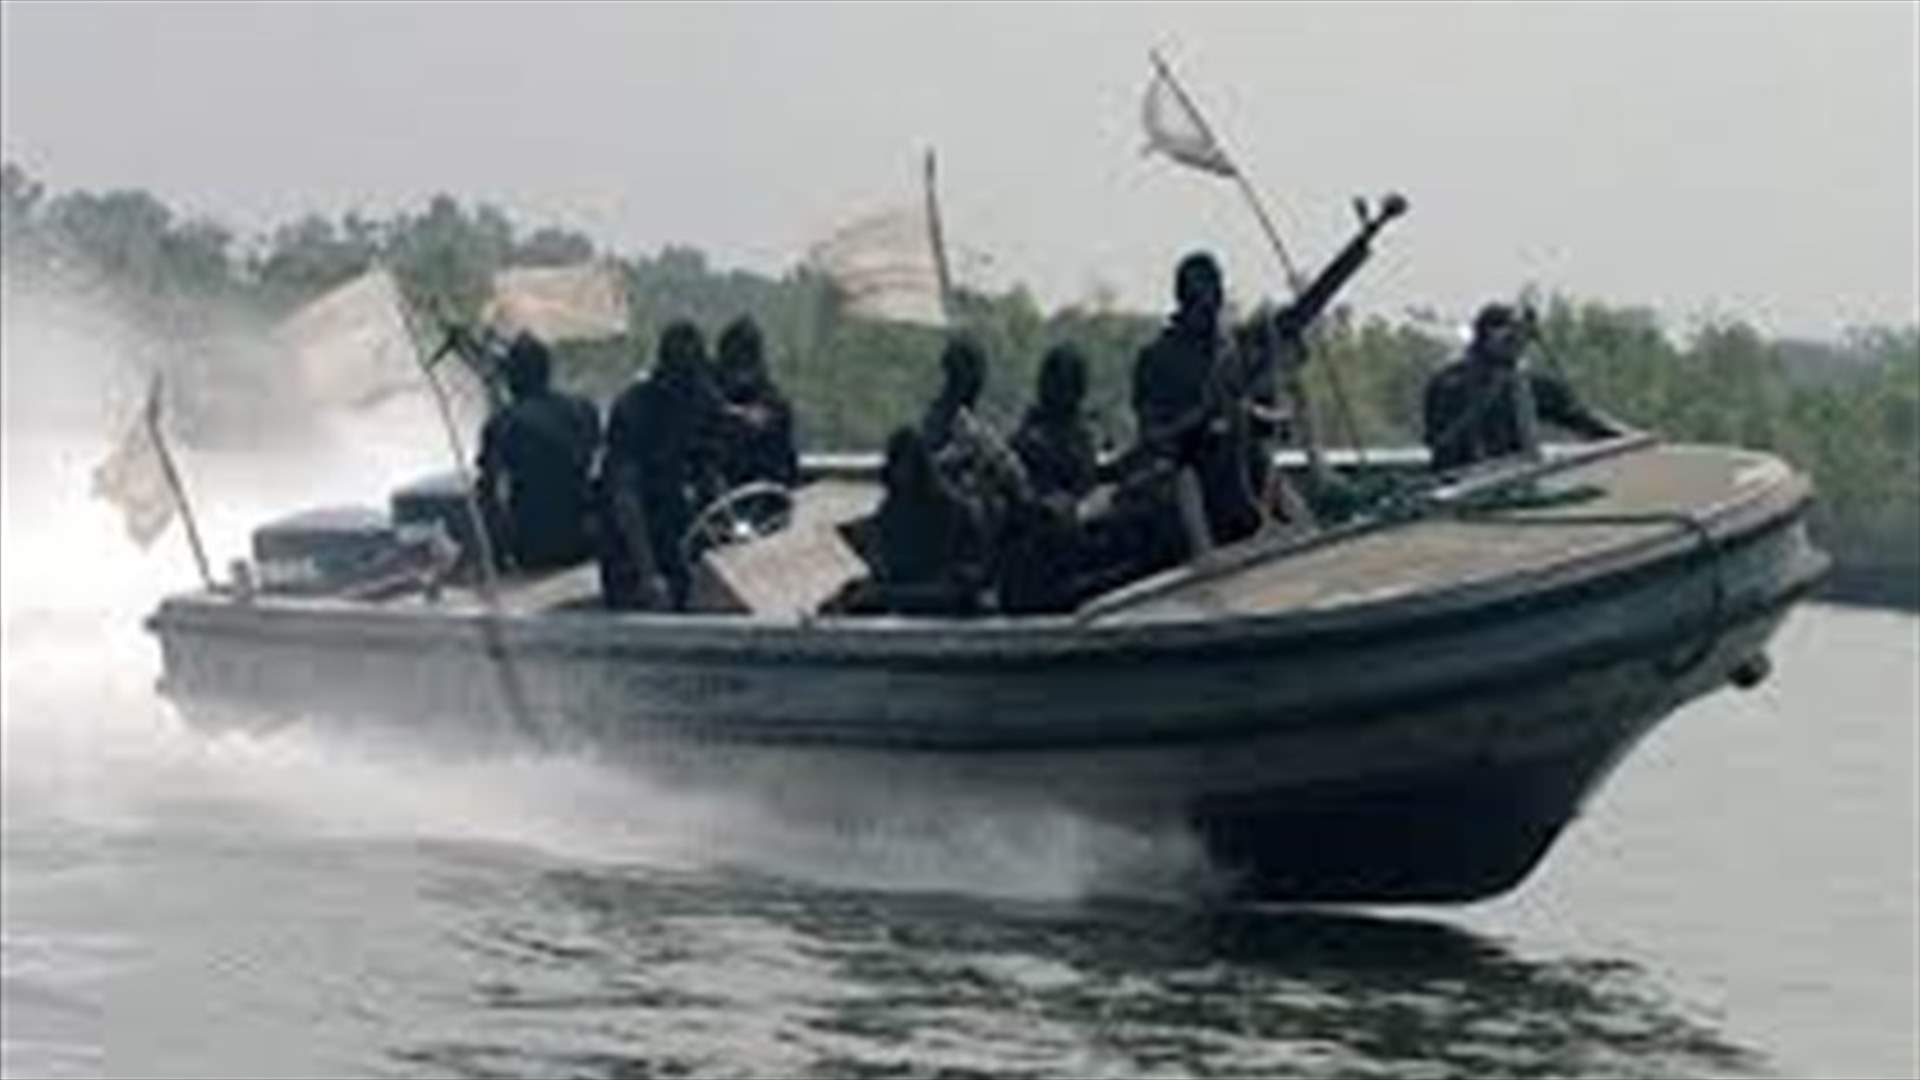  Pirates board Turkish vessel, capture 6 crew off Nigeria